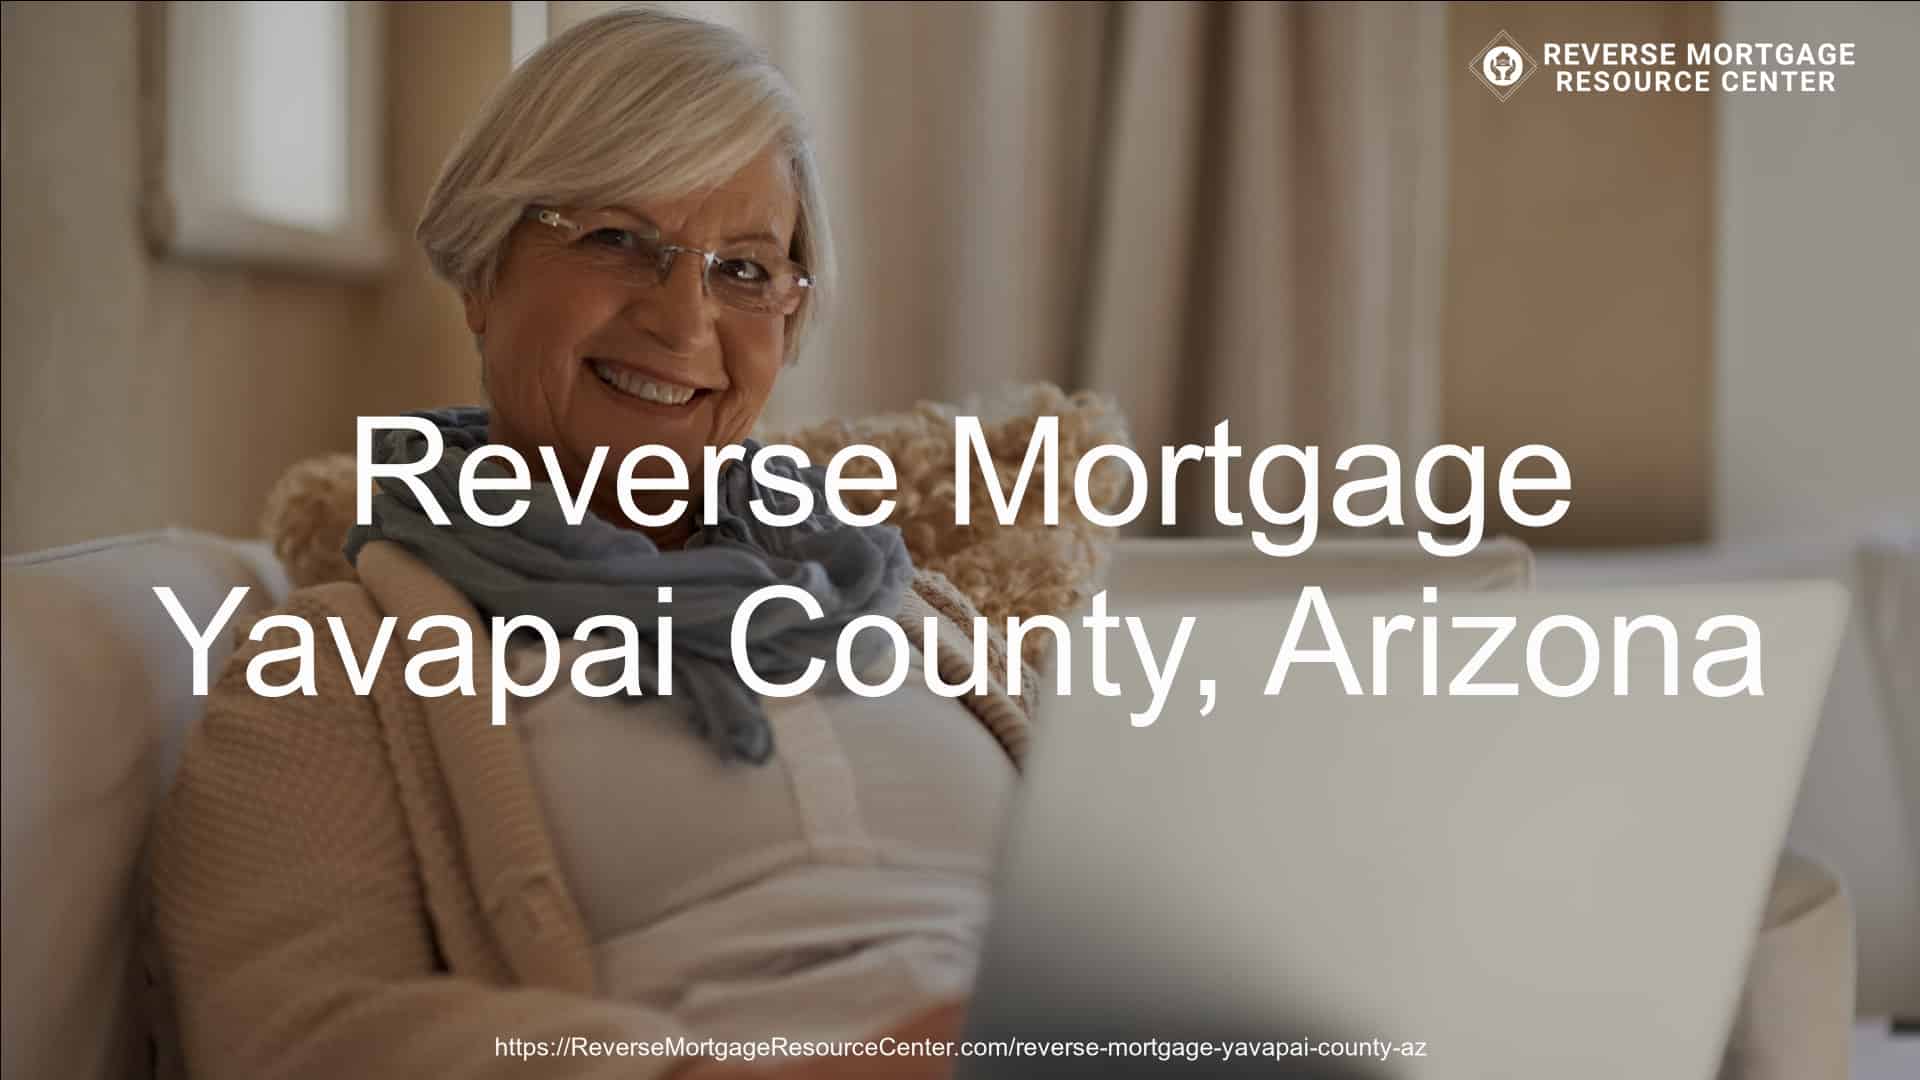 Reverse Mortgage Loans in Yavapai County Arizona